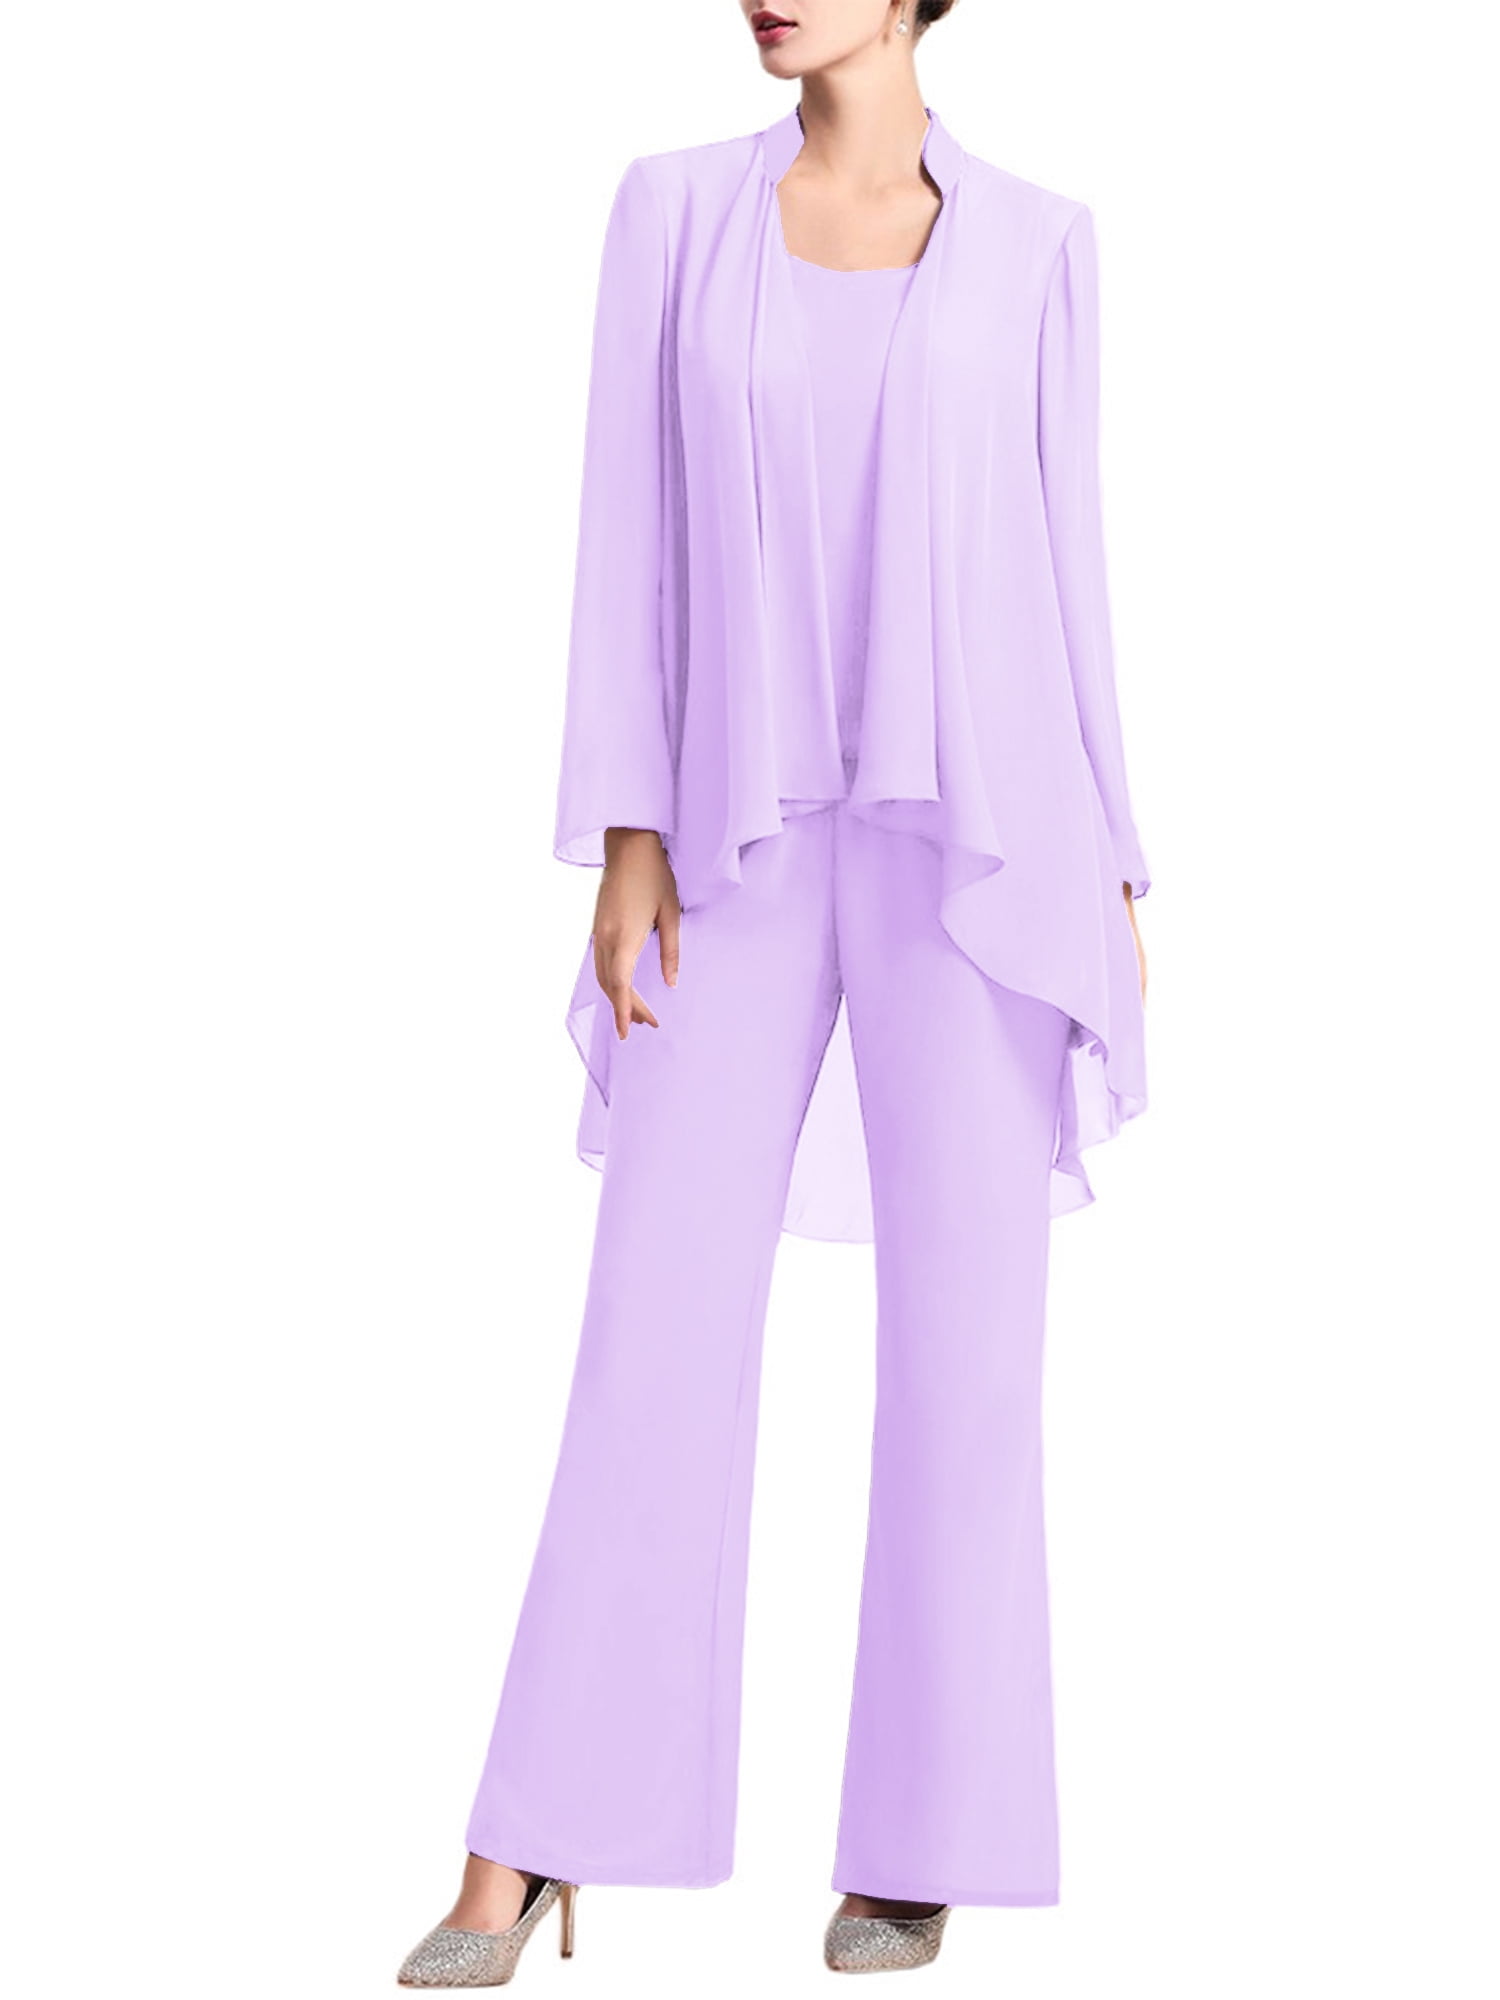 DPOIS Elegant Chiffon Formal Evening Party Suit Mother of the Bride  Pantsuits Lavender XL